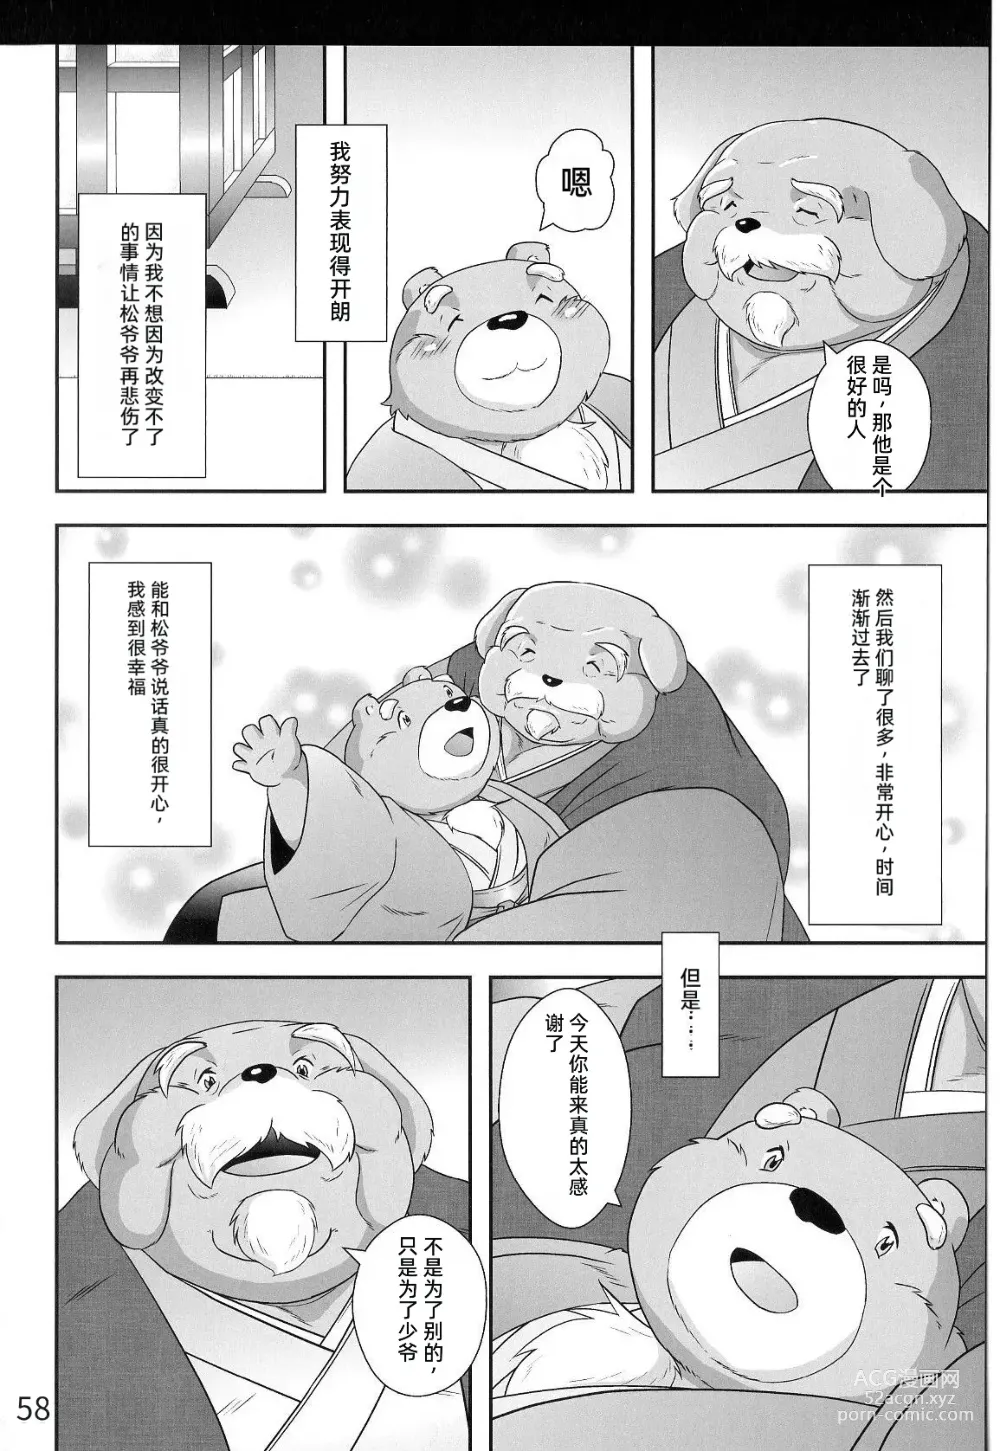 Page 57 of doujinshi 兽之楼郭 月华缭乱 月阴之章